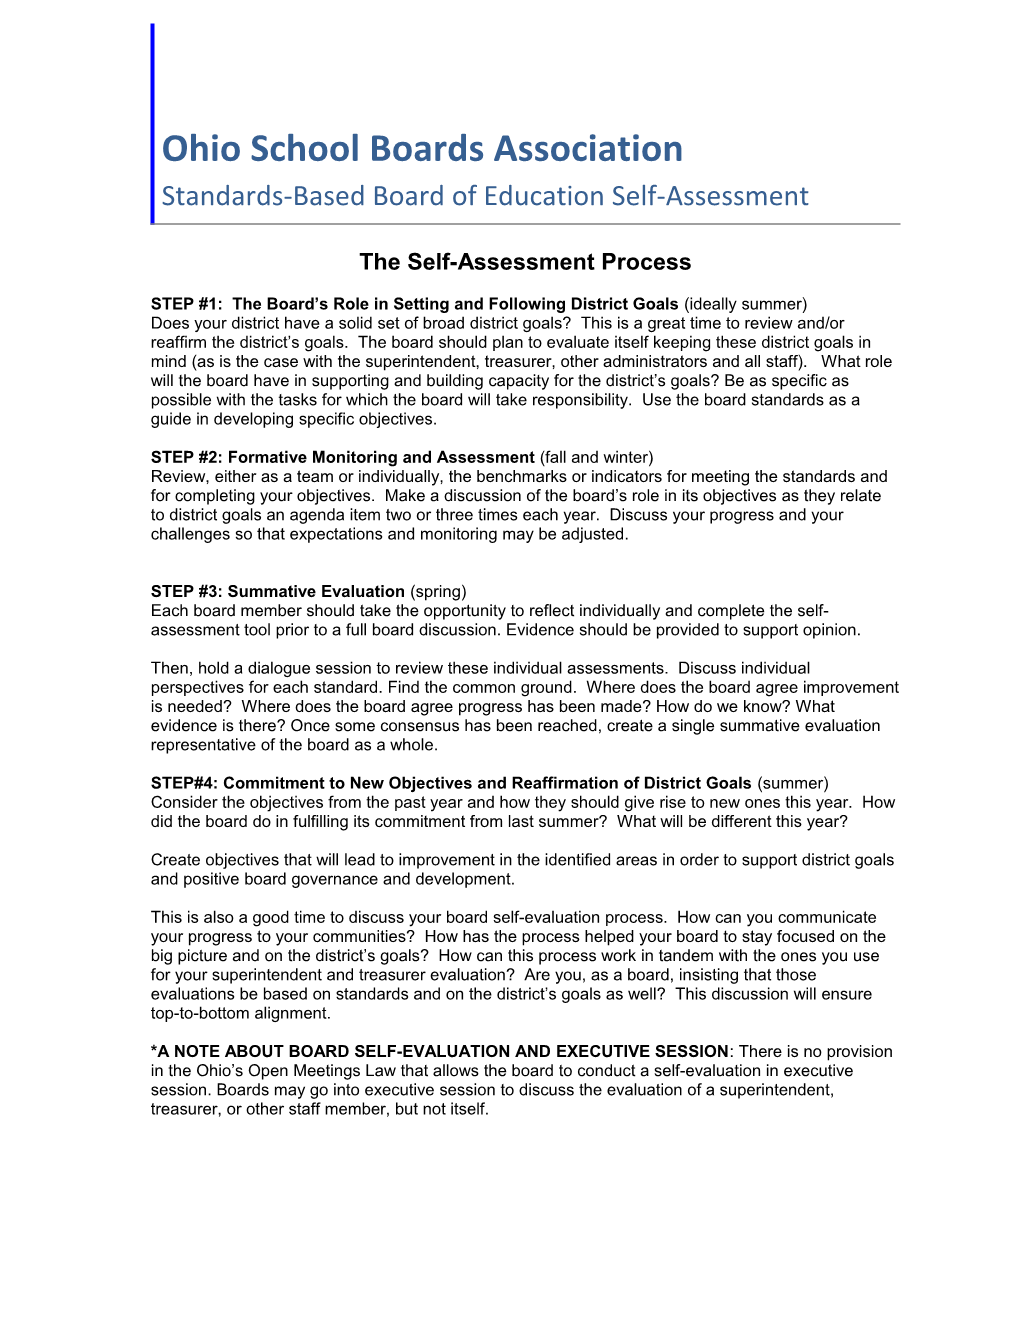 Board of Trustees Self-Assessment